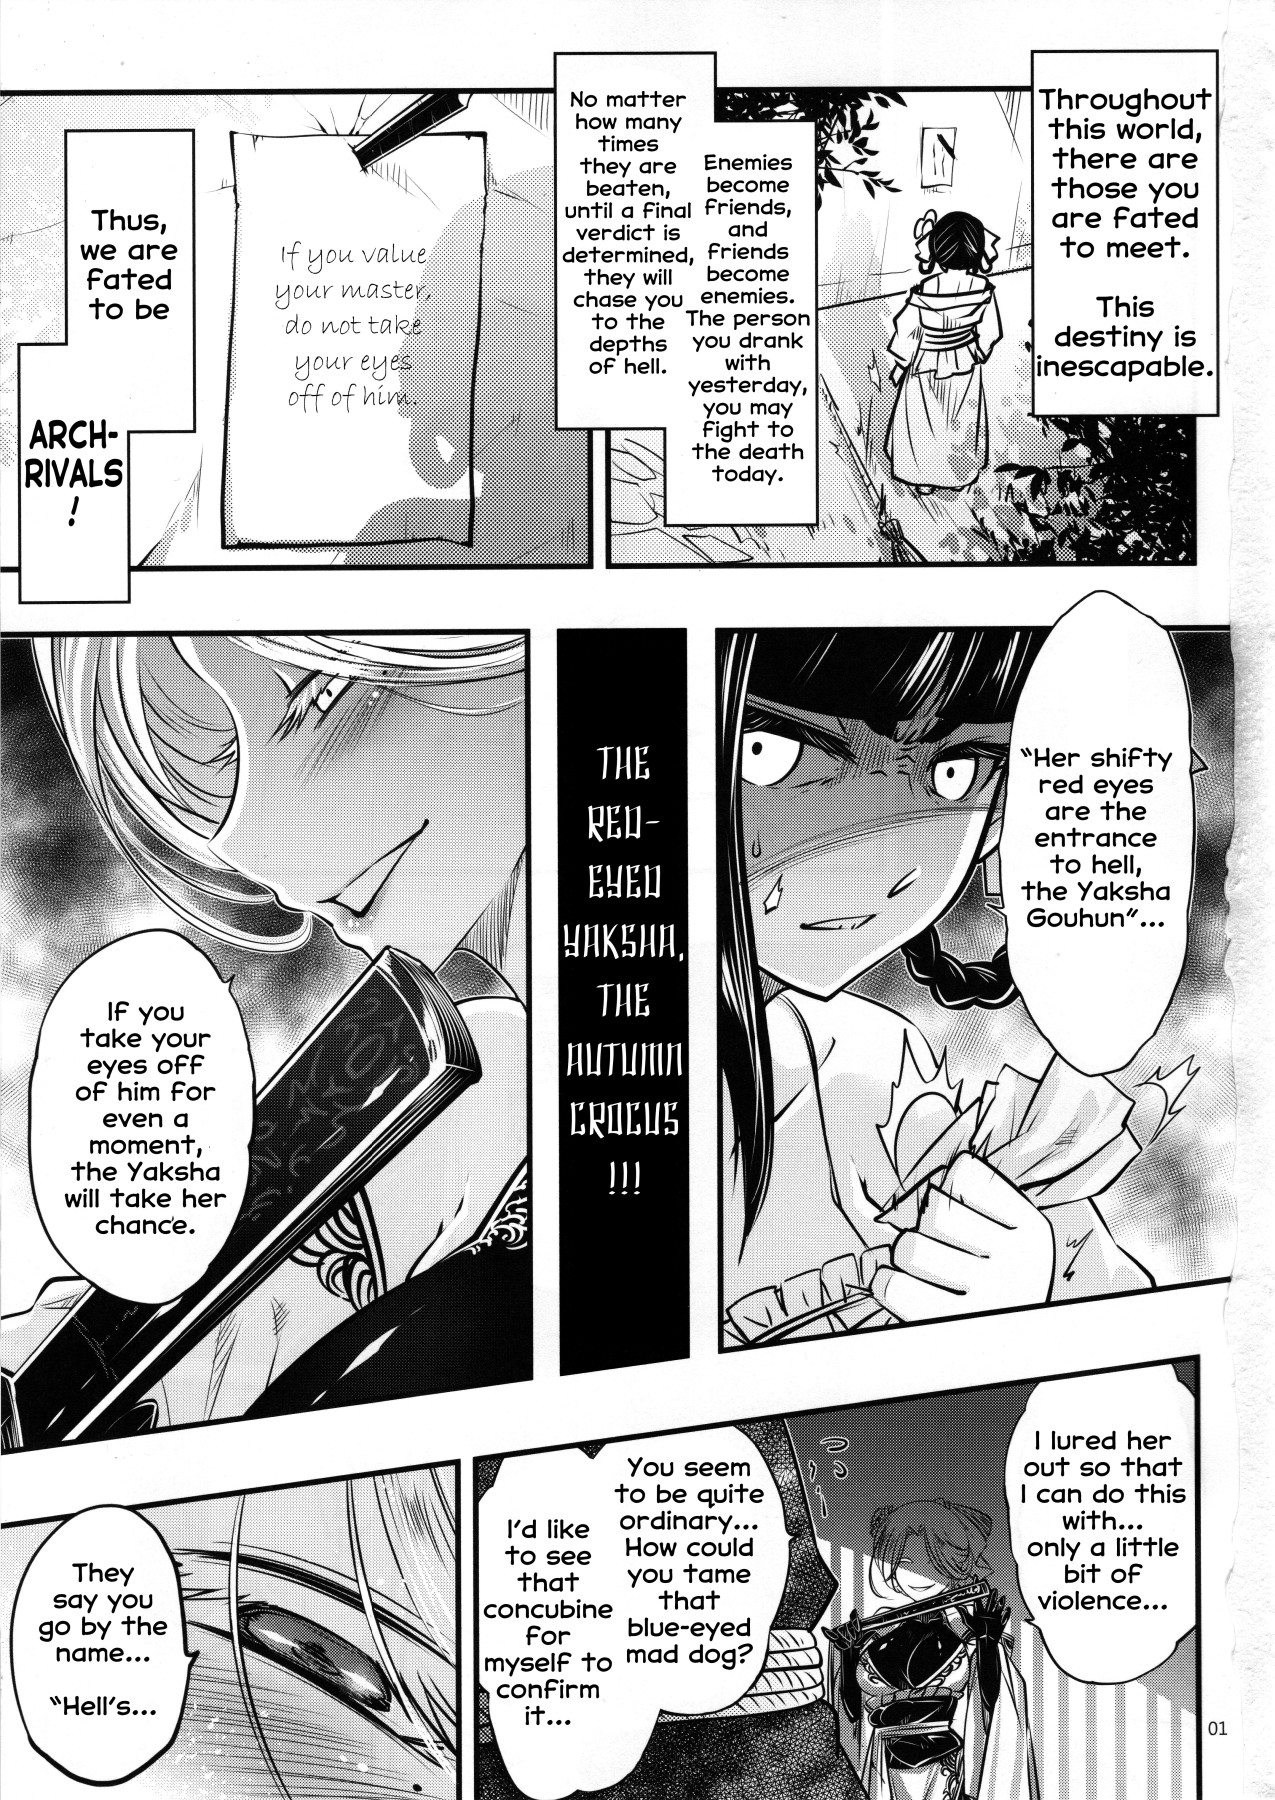 Hentai Manga Comic-Hyakkasou4 <<The Terror of the Red-Eyed Yaksha, the Autumn Crocus!>>-Read-2